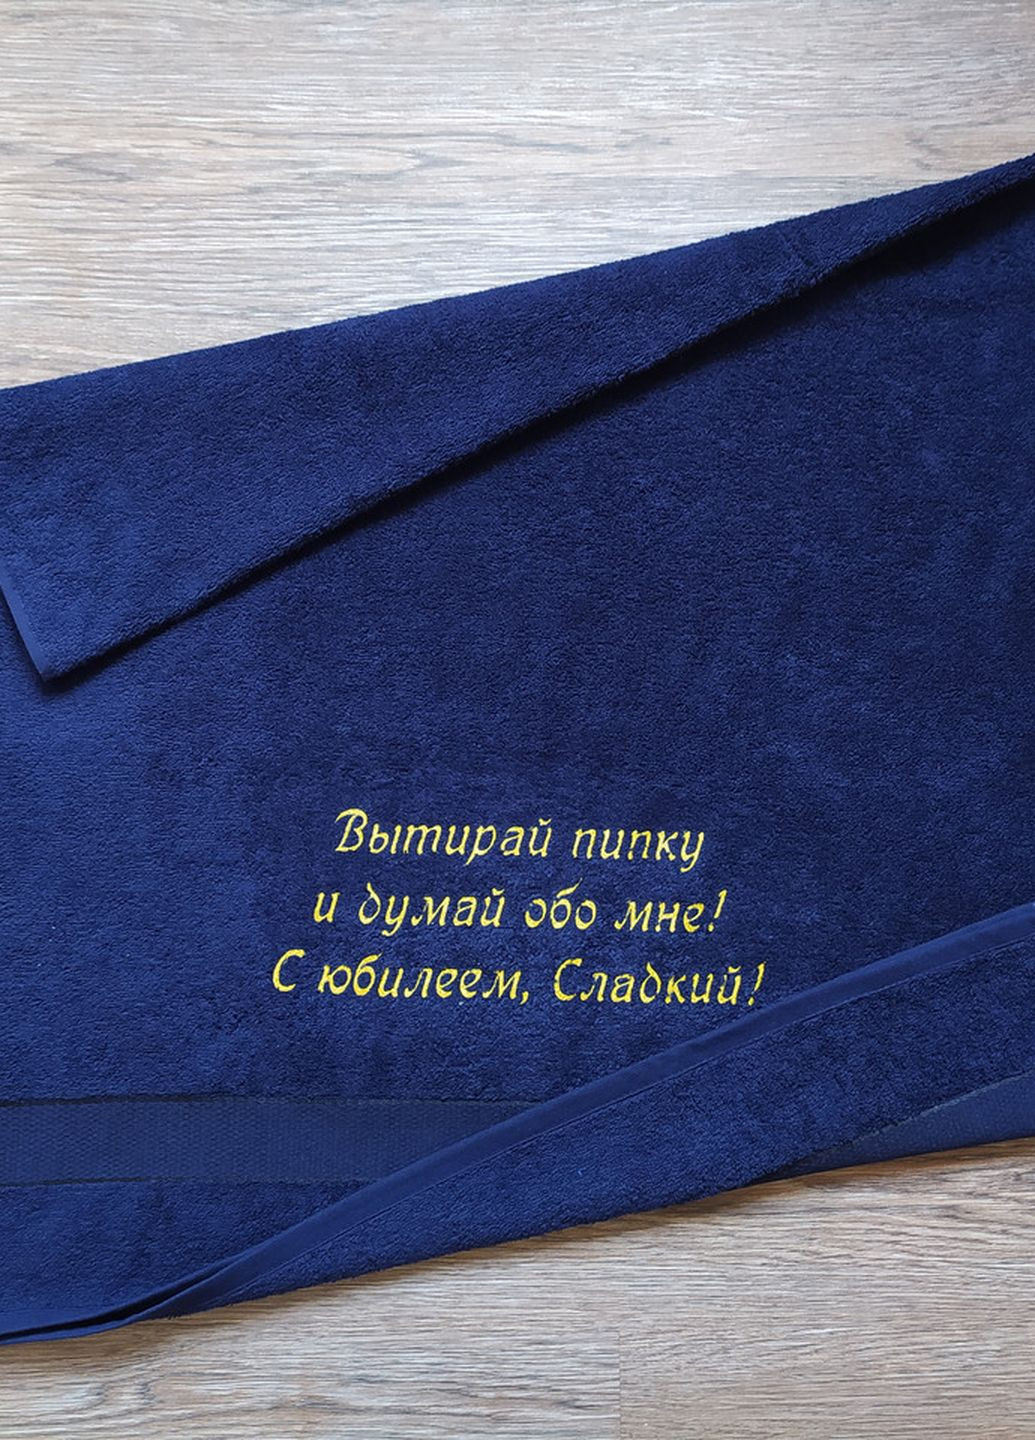 No Brand полотенце с вышивкой махровое банное 70*140 темно-синий любимому мужу парню 00264 однотонный темно-синий производство - Украина